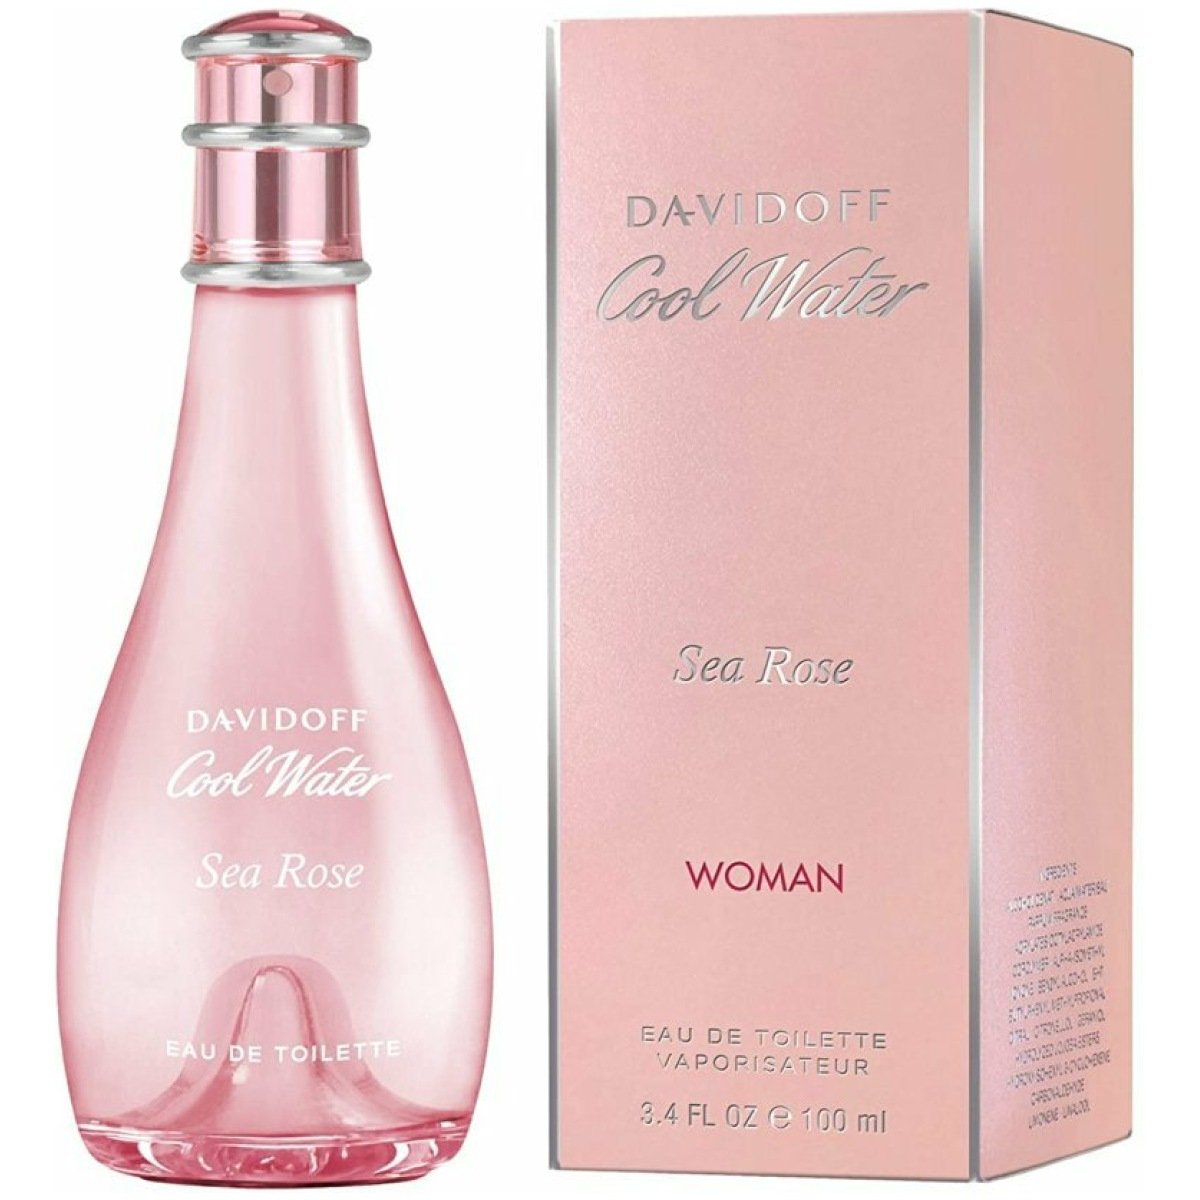 Davidoff Cool Water Sea Rose EDT Perfume For Women 100 ml